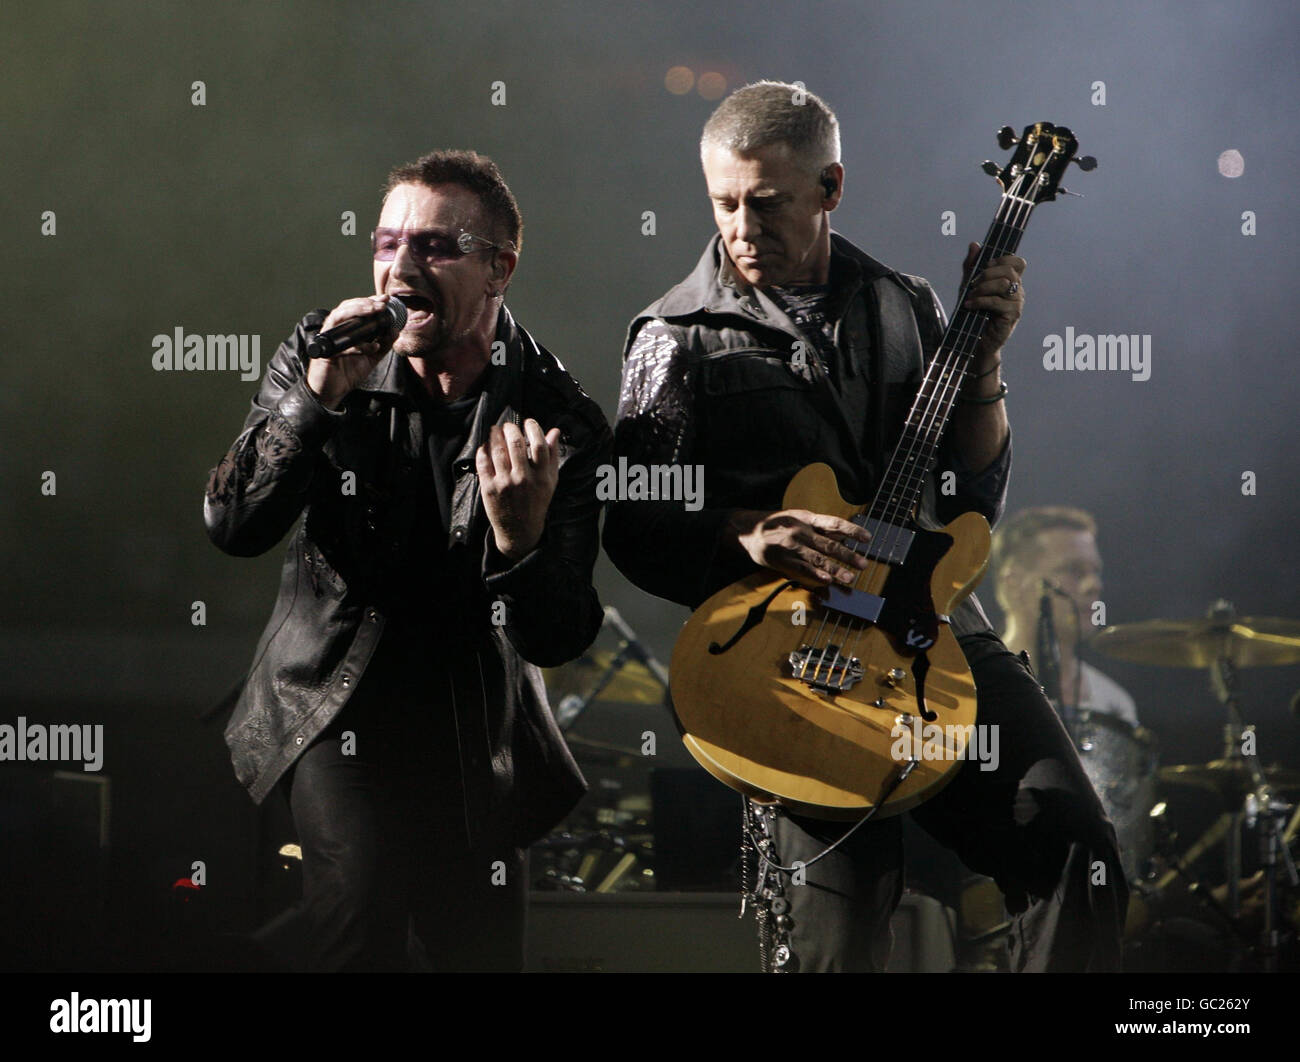 U2 perform at Wembley Stadium - London. Bono (left) and Adam Clayton of U2 performing at Wembley Stadium in north London. Stock Photo